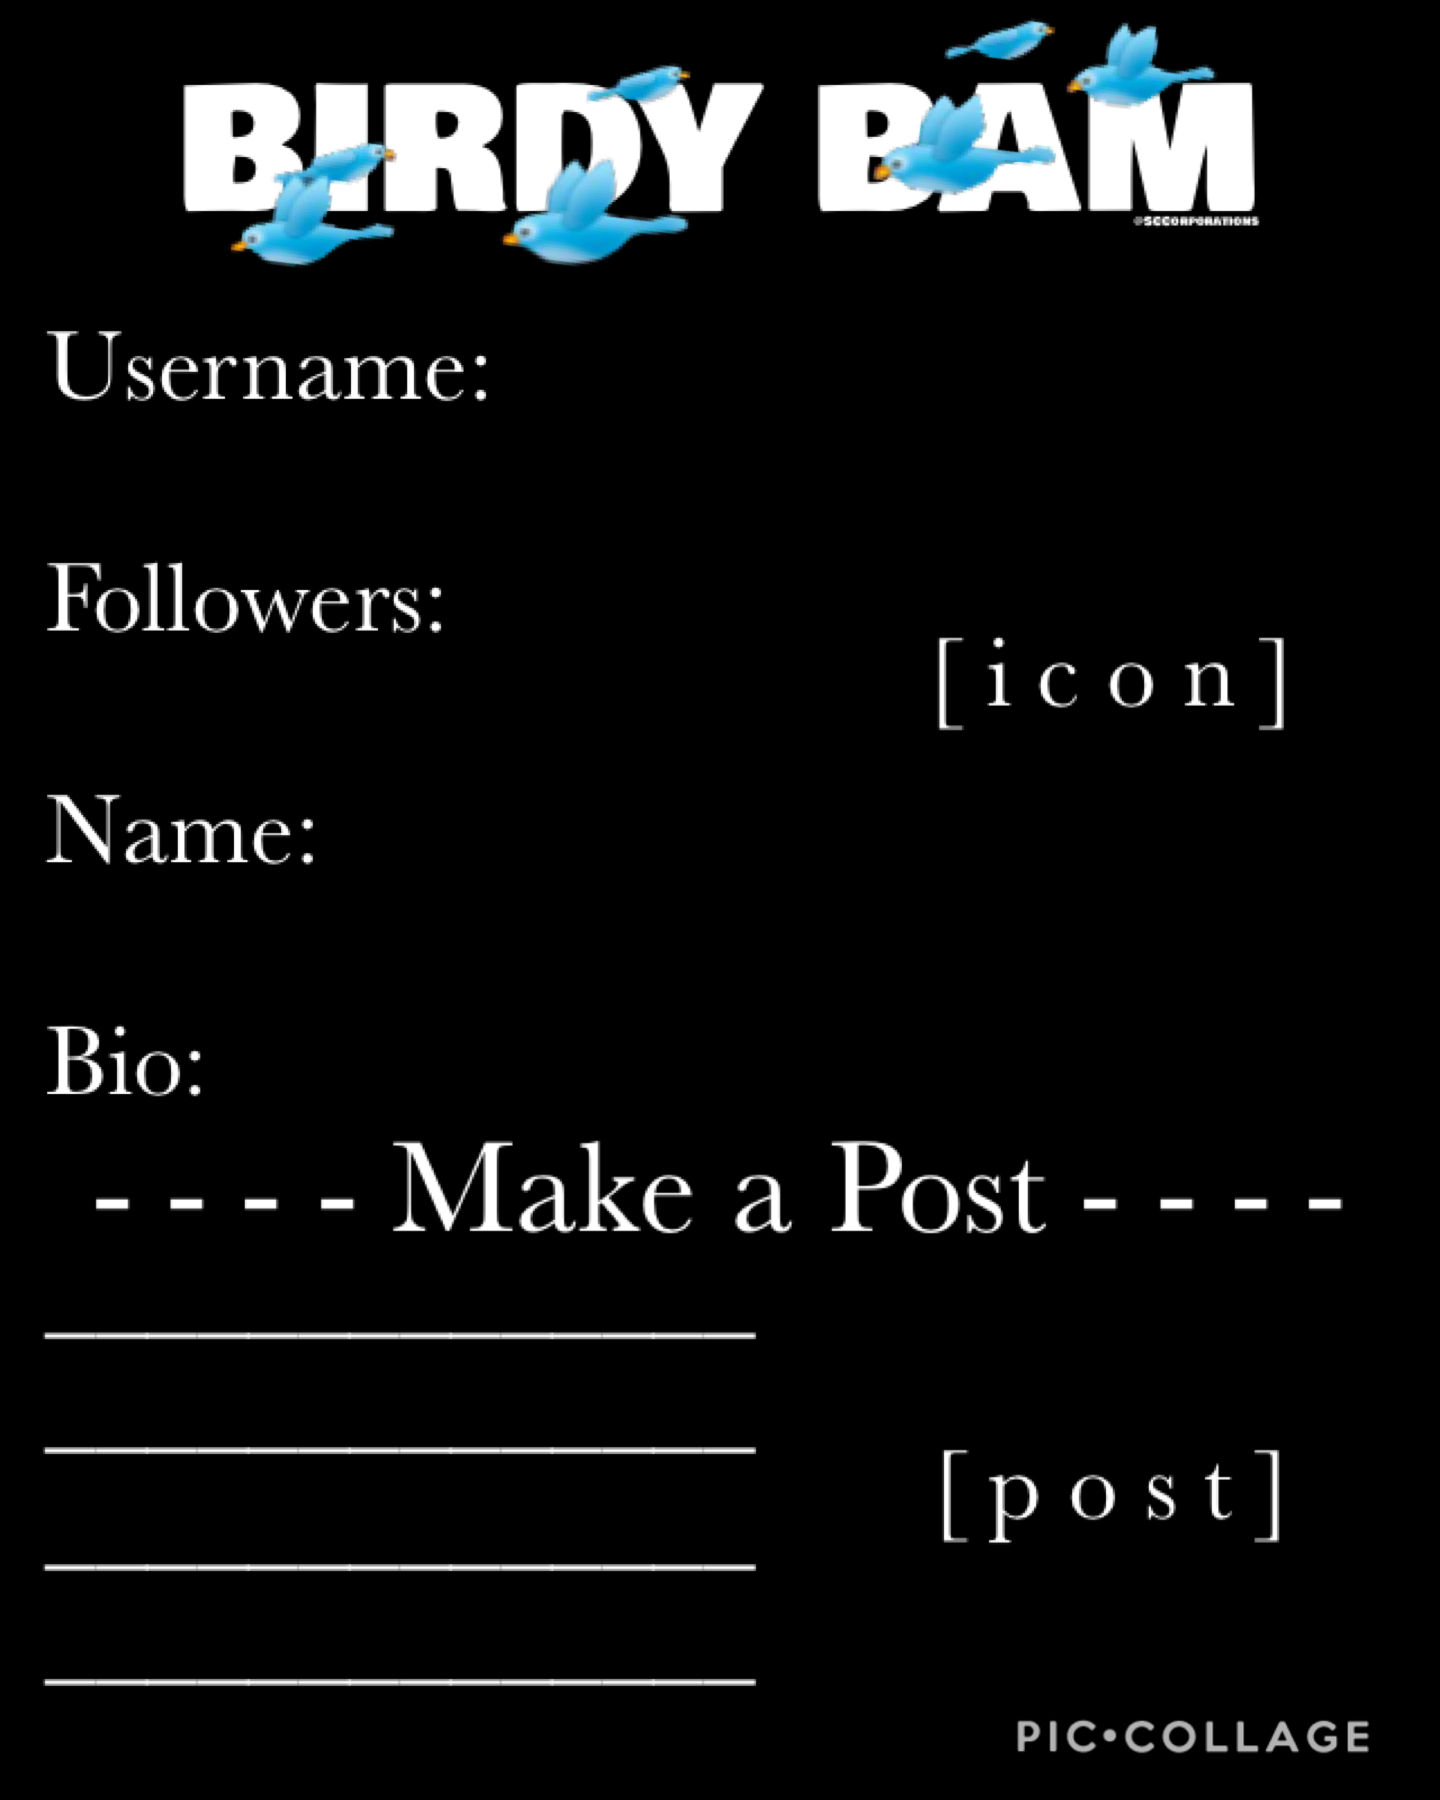 Birdy Bam 2.0

- make posts
- share your life
- gain followers
- have fun!